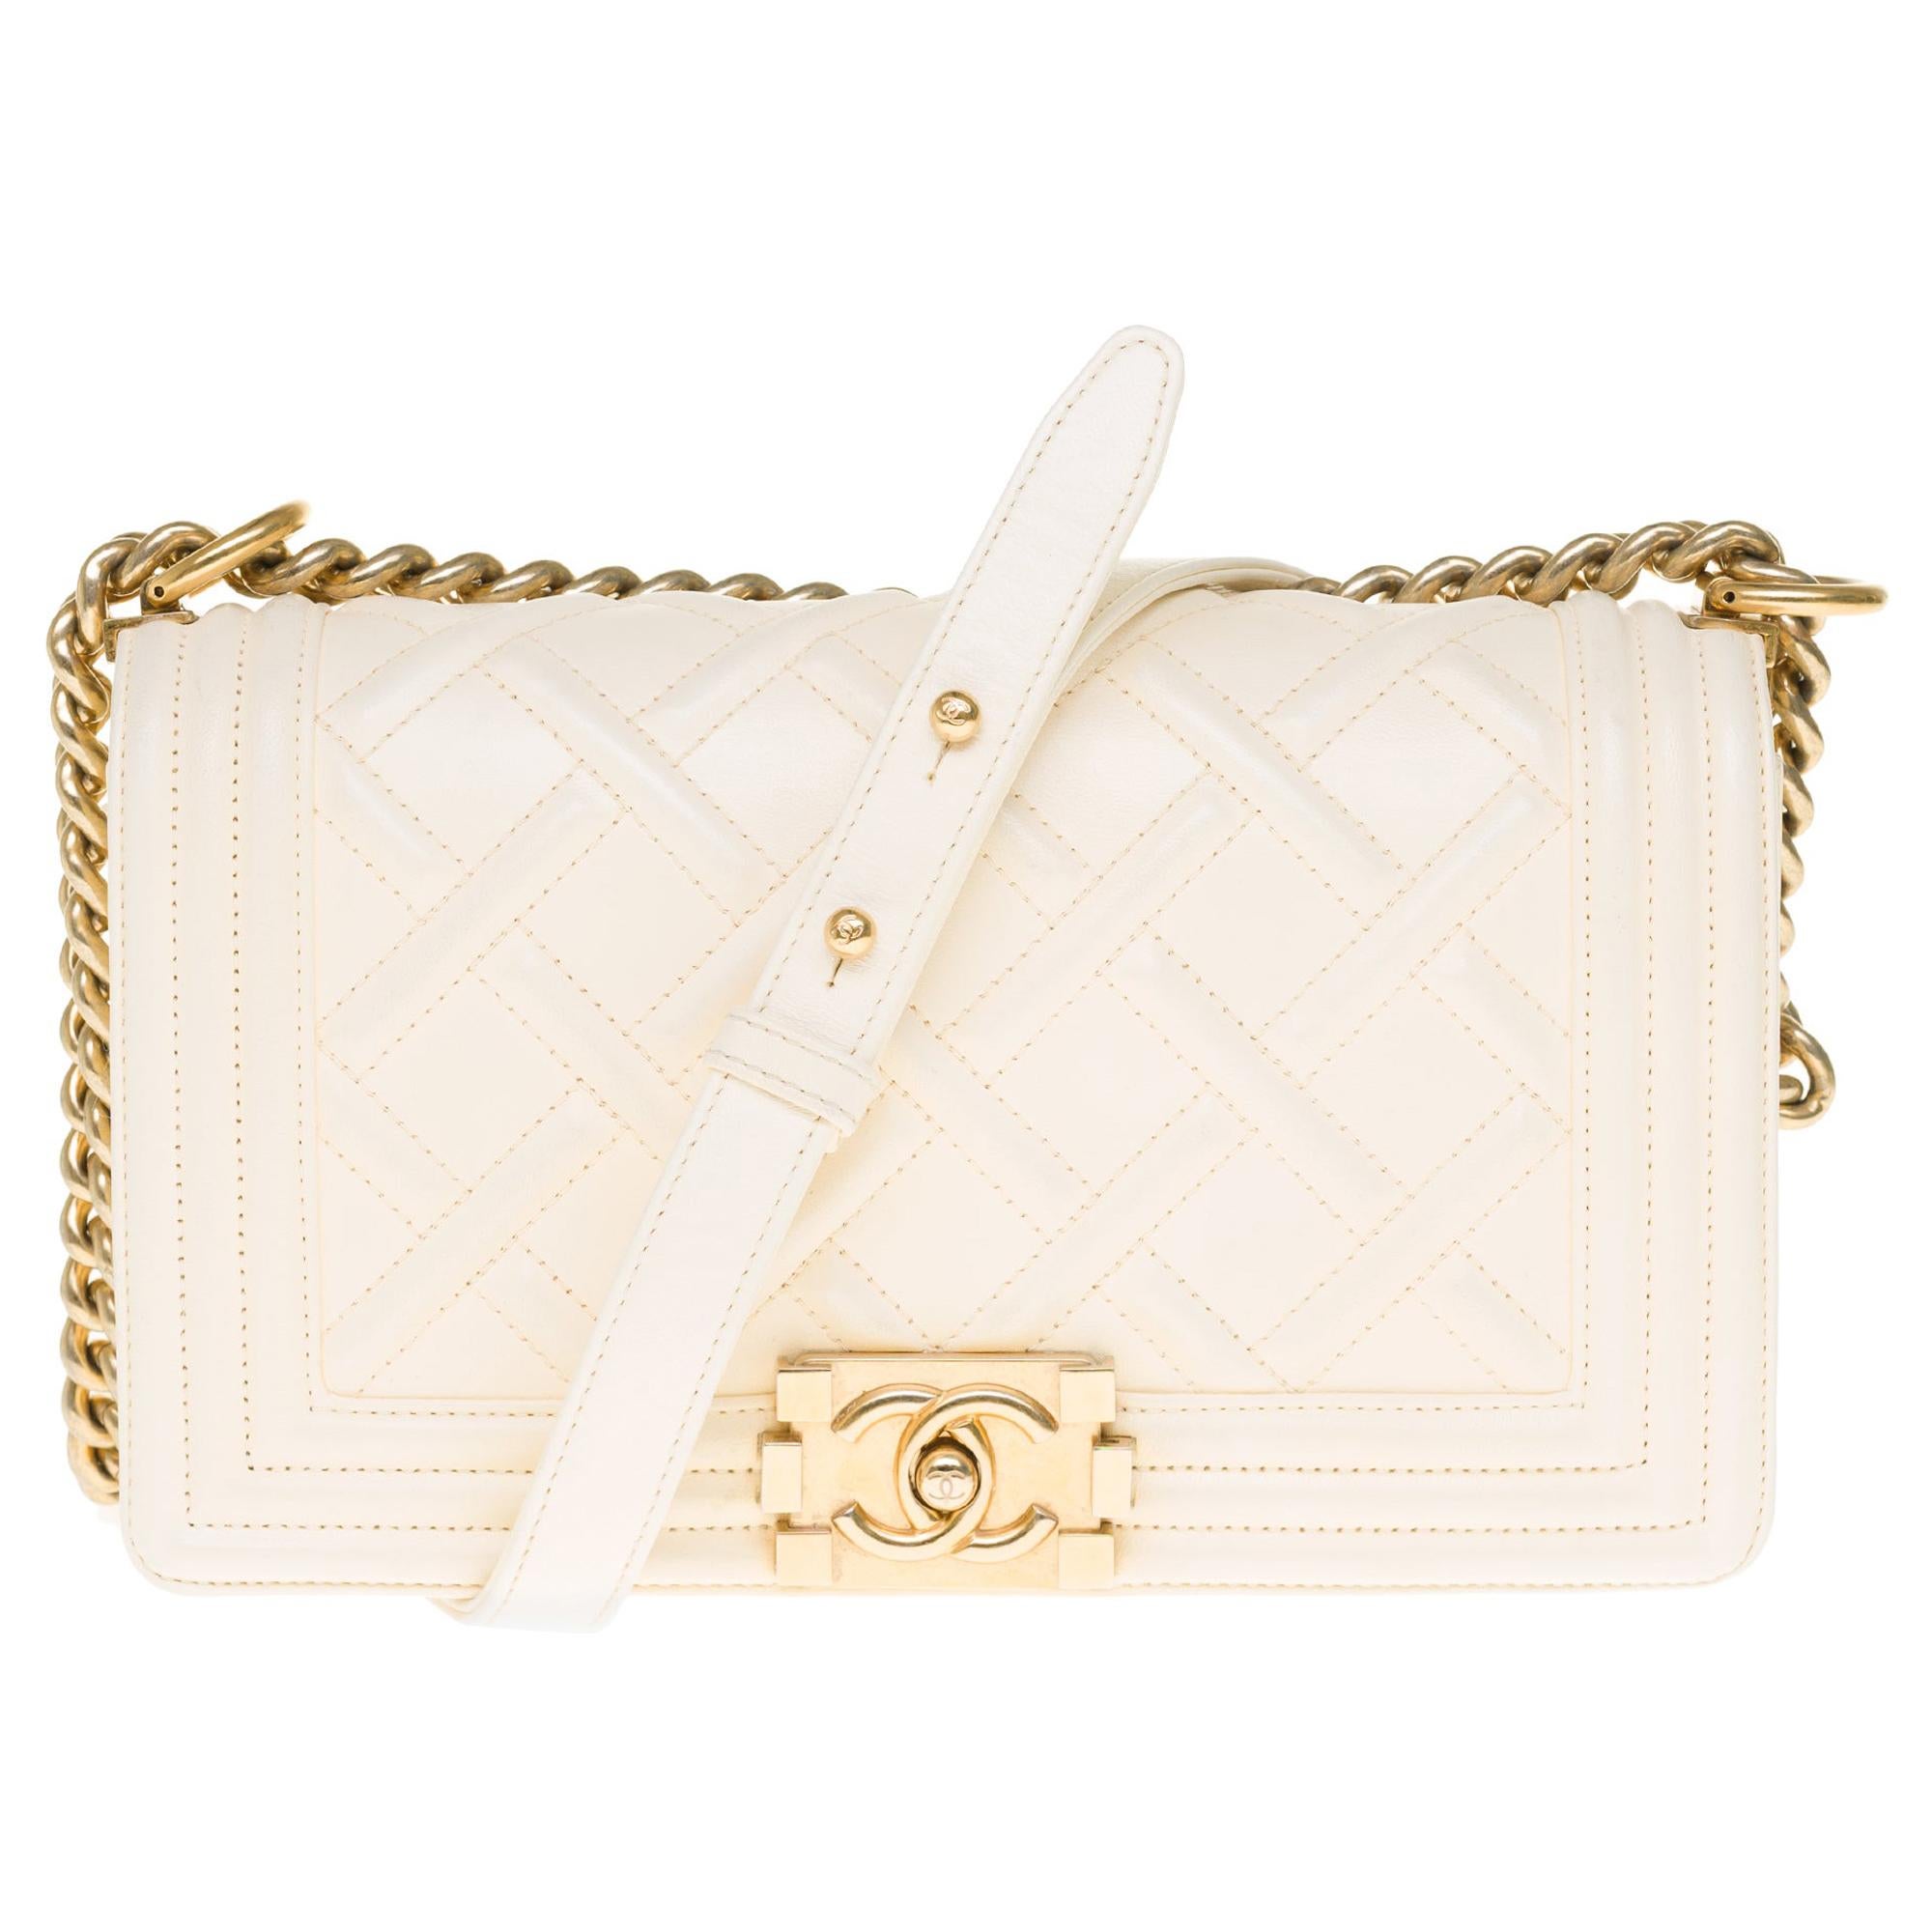 Chanel Boy Paris/Edinburgh handbag in ivory embossed leather, GHW !